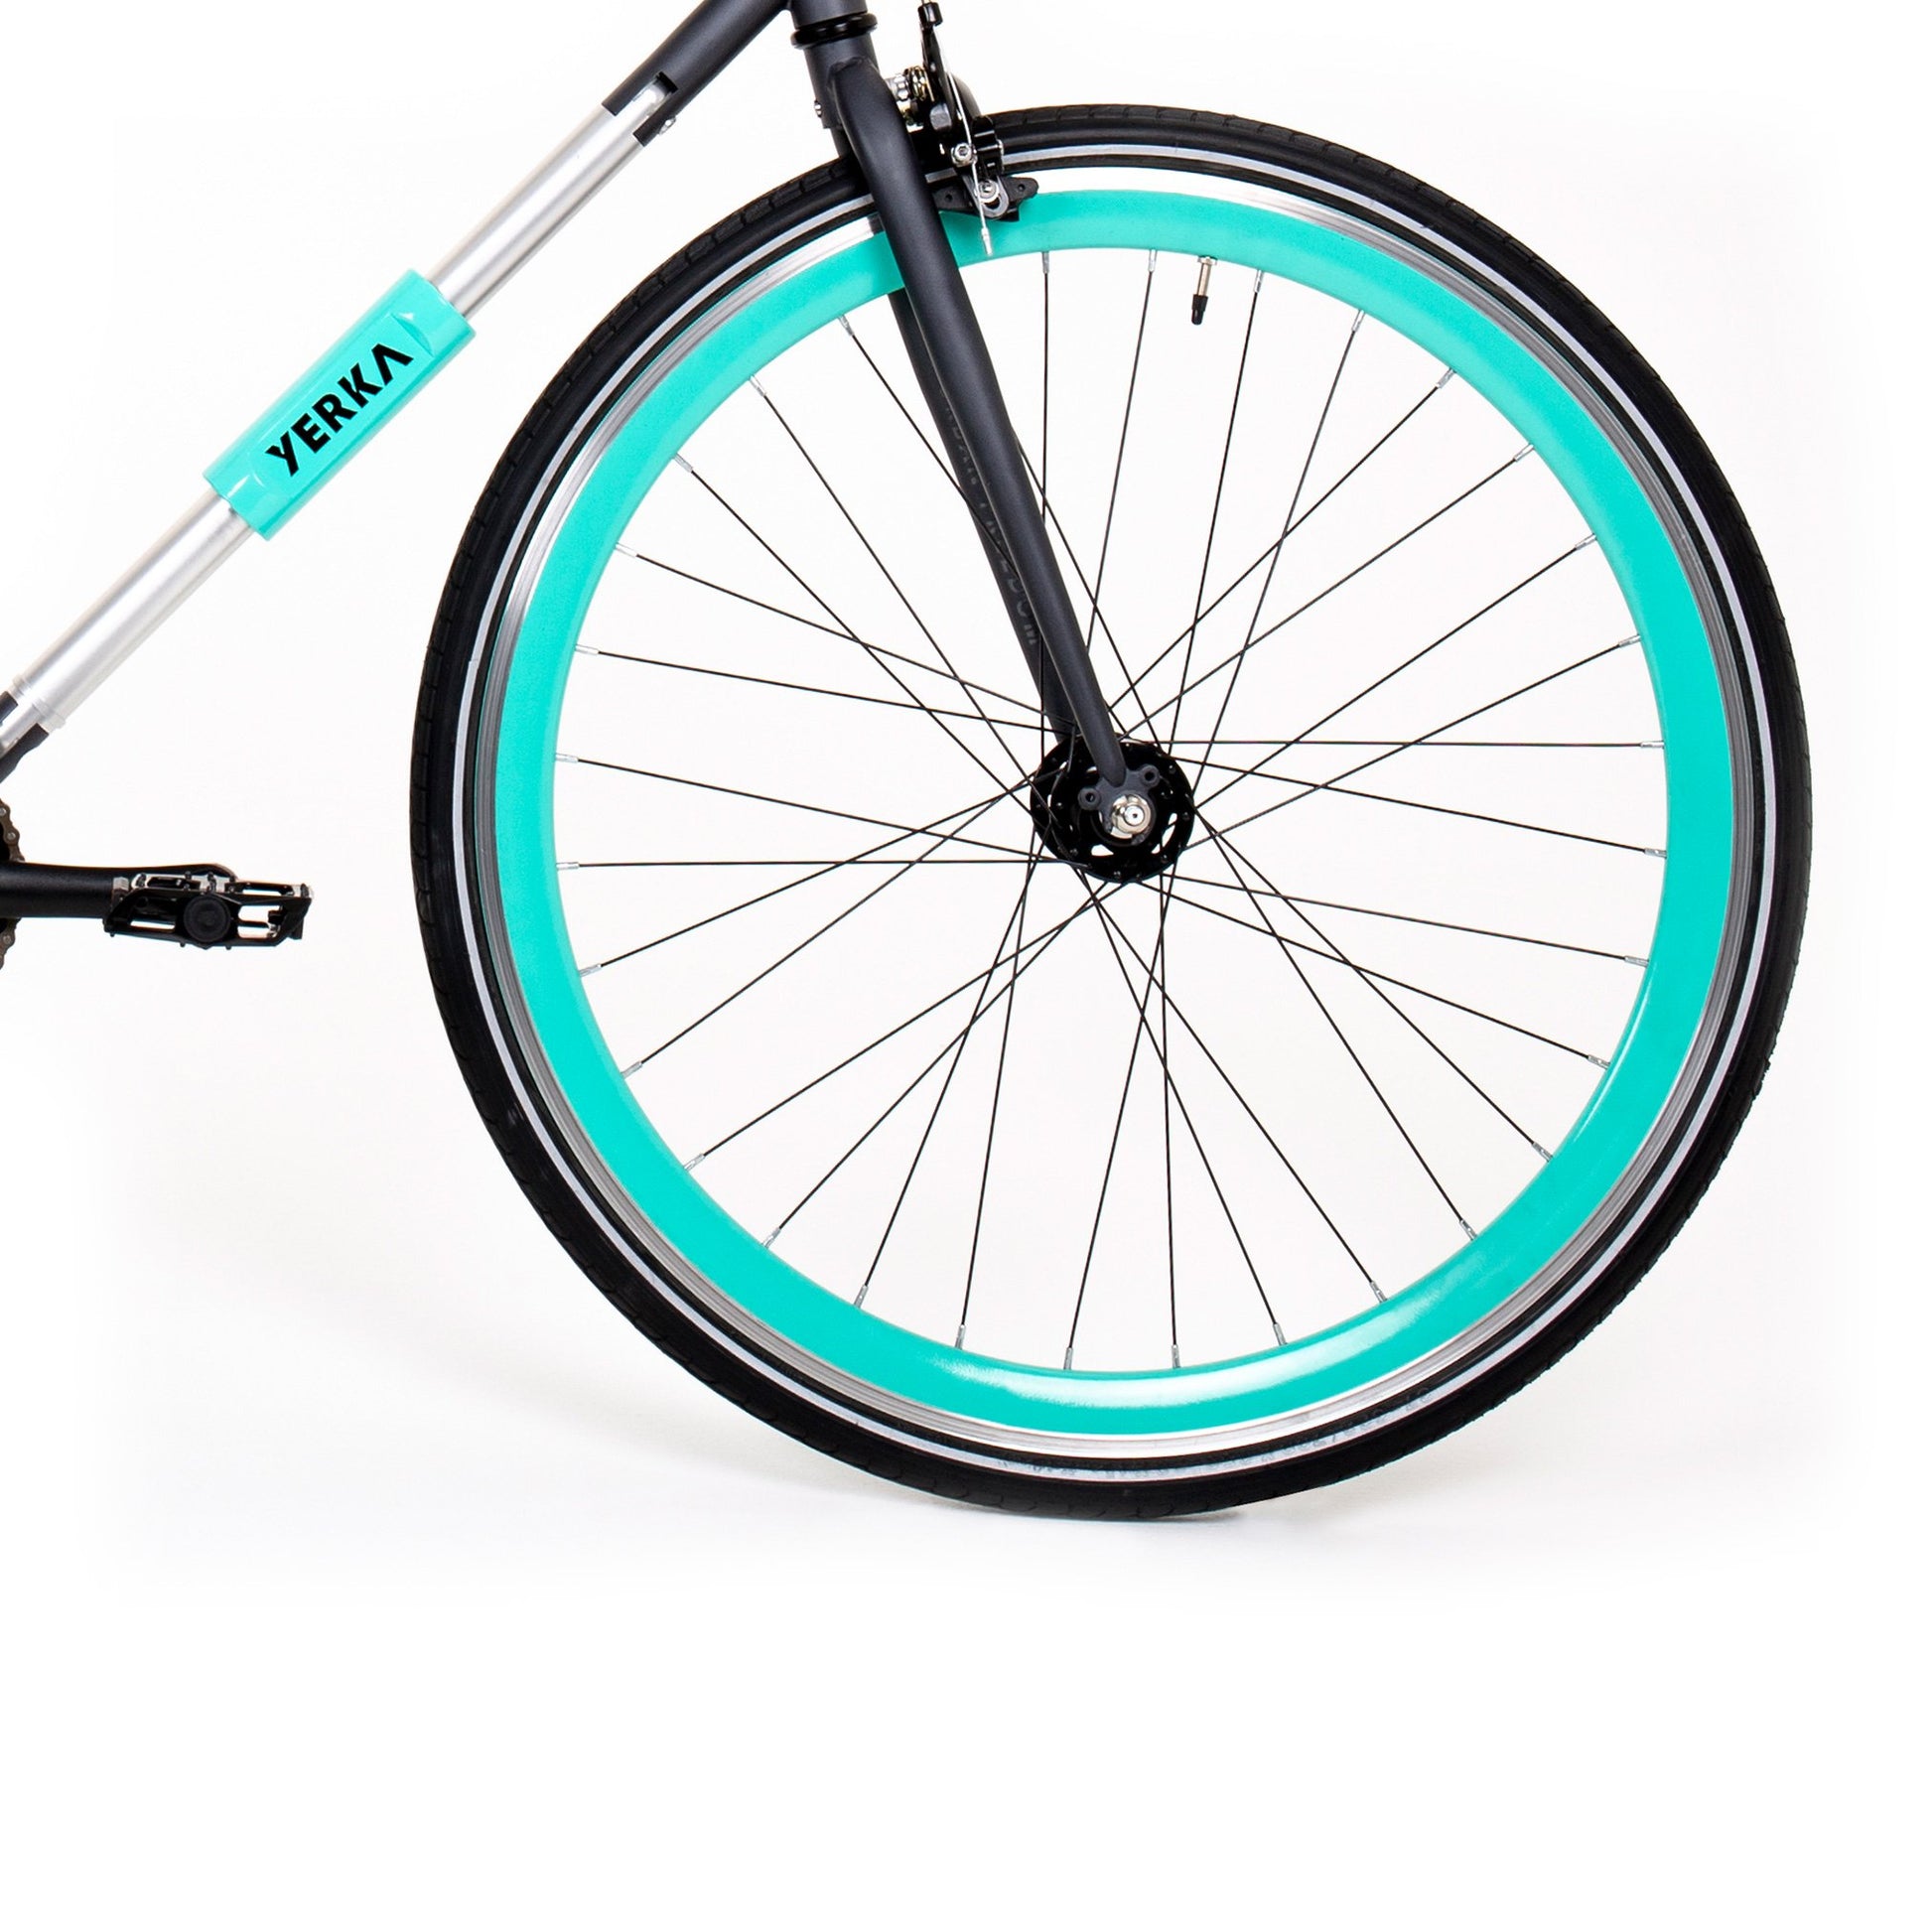 YERKA V3 SingleSpeed -mejor-bicicleta-antirrobo-urbana-diseño-chile-hibrida-aro-28-29-candado-integrado-online